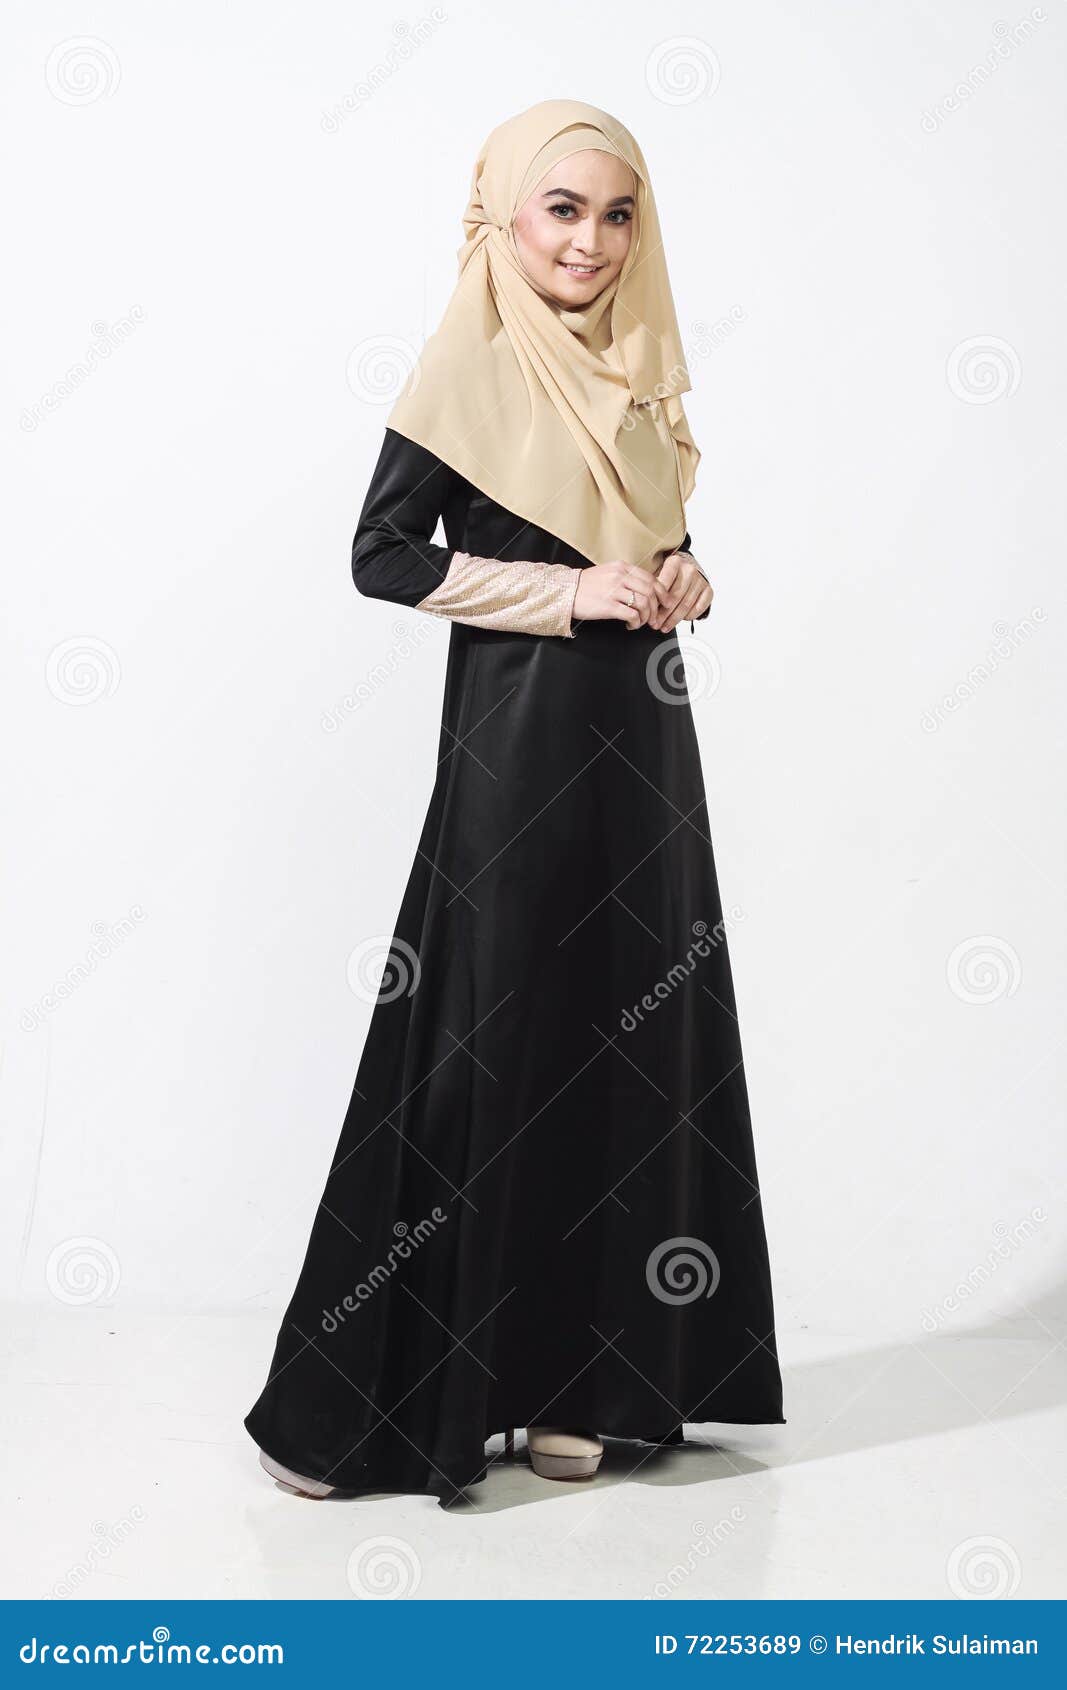 Asian Malay Woman Posing with Muslim Attire Stock Image - Image of ...